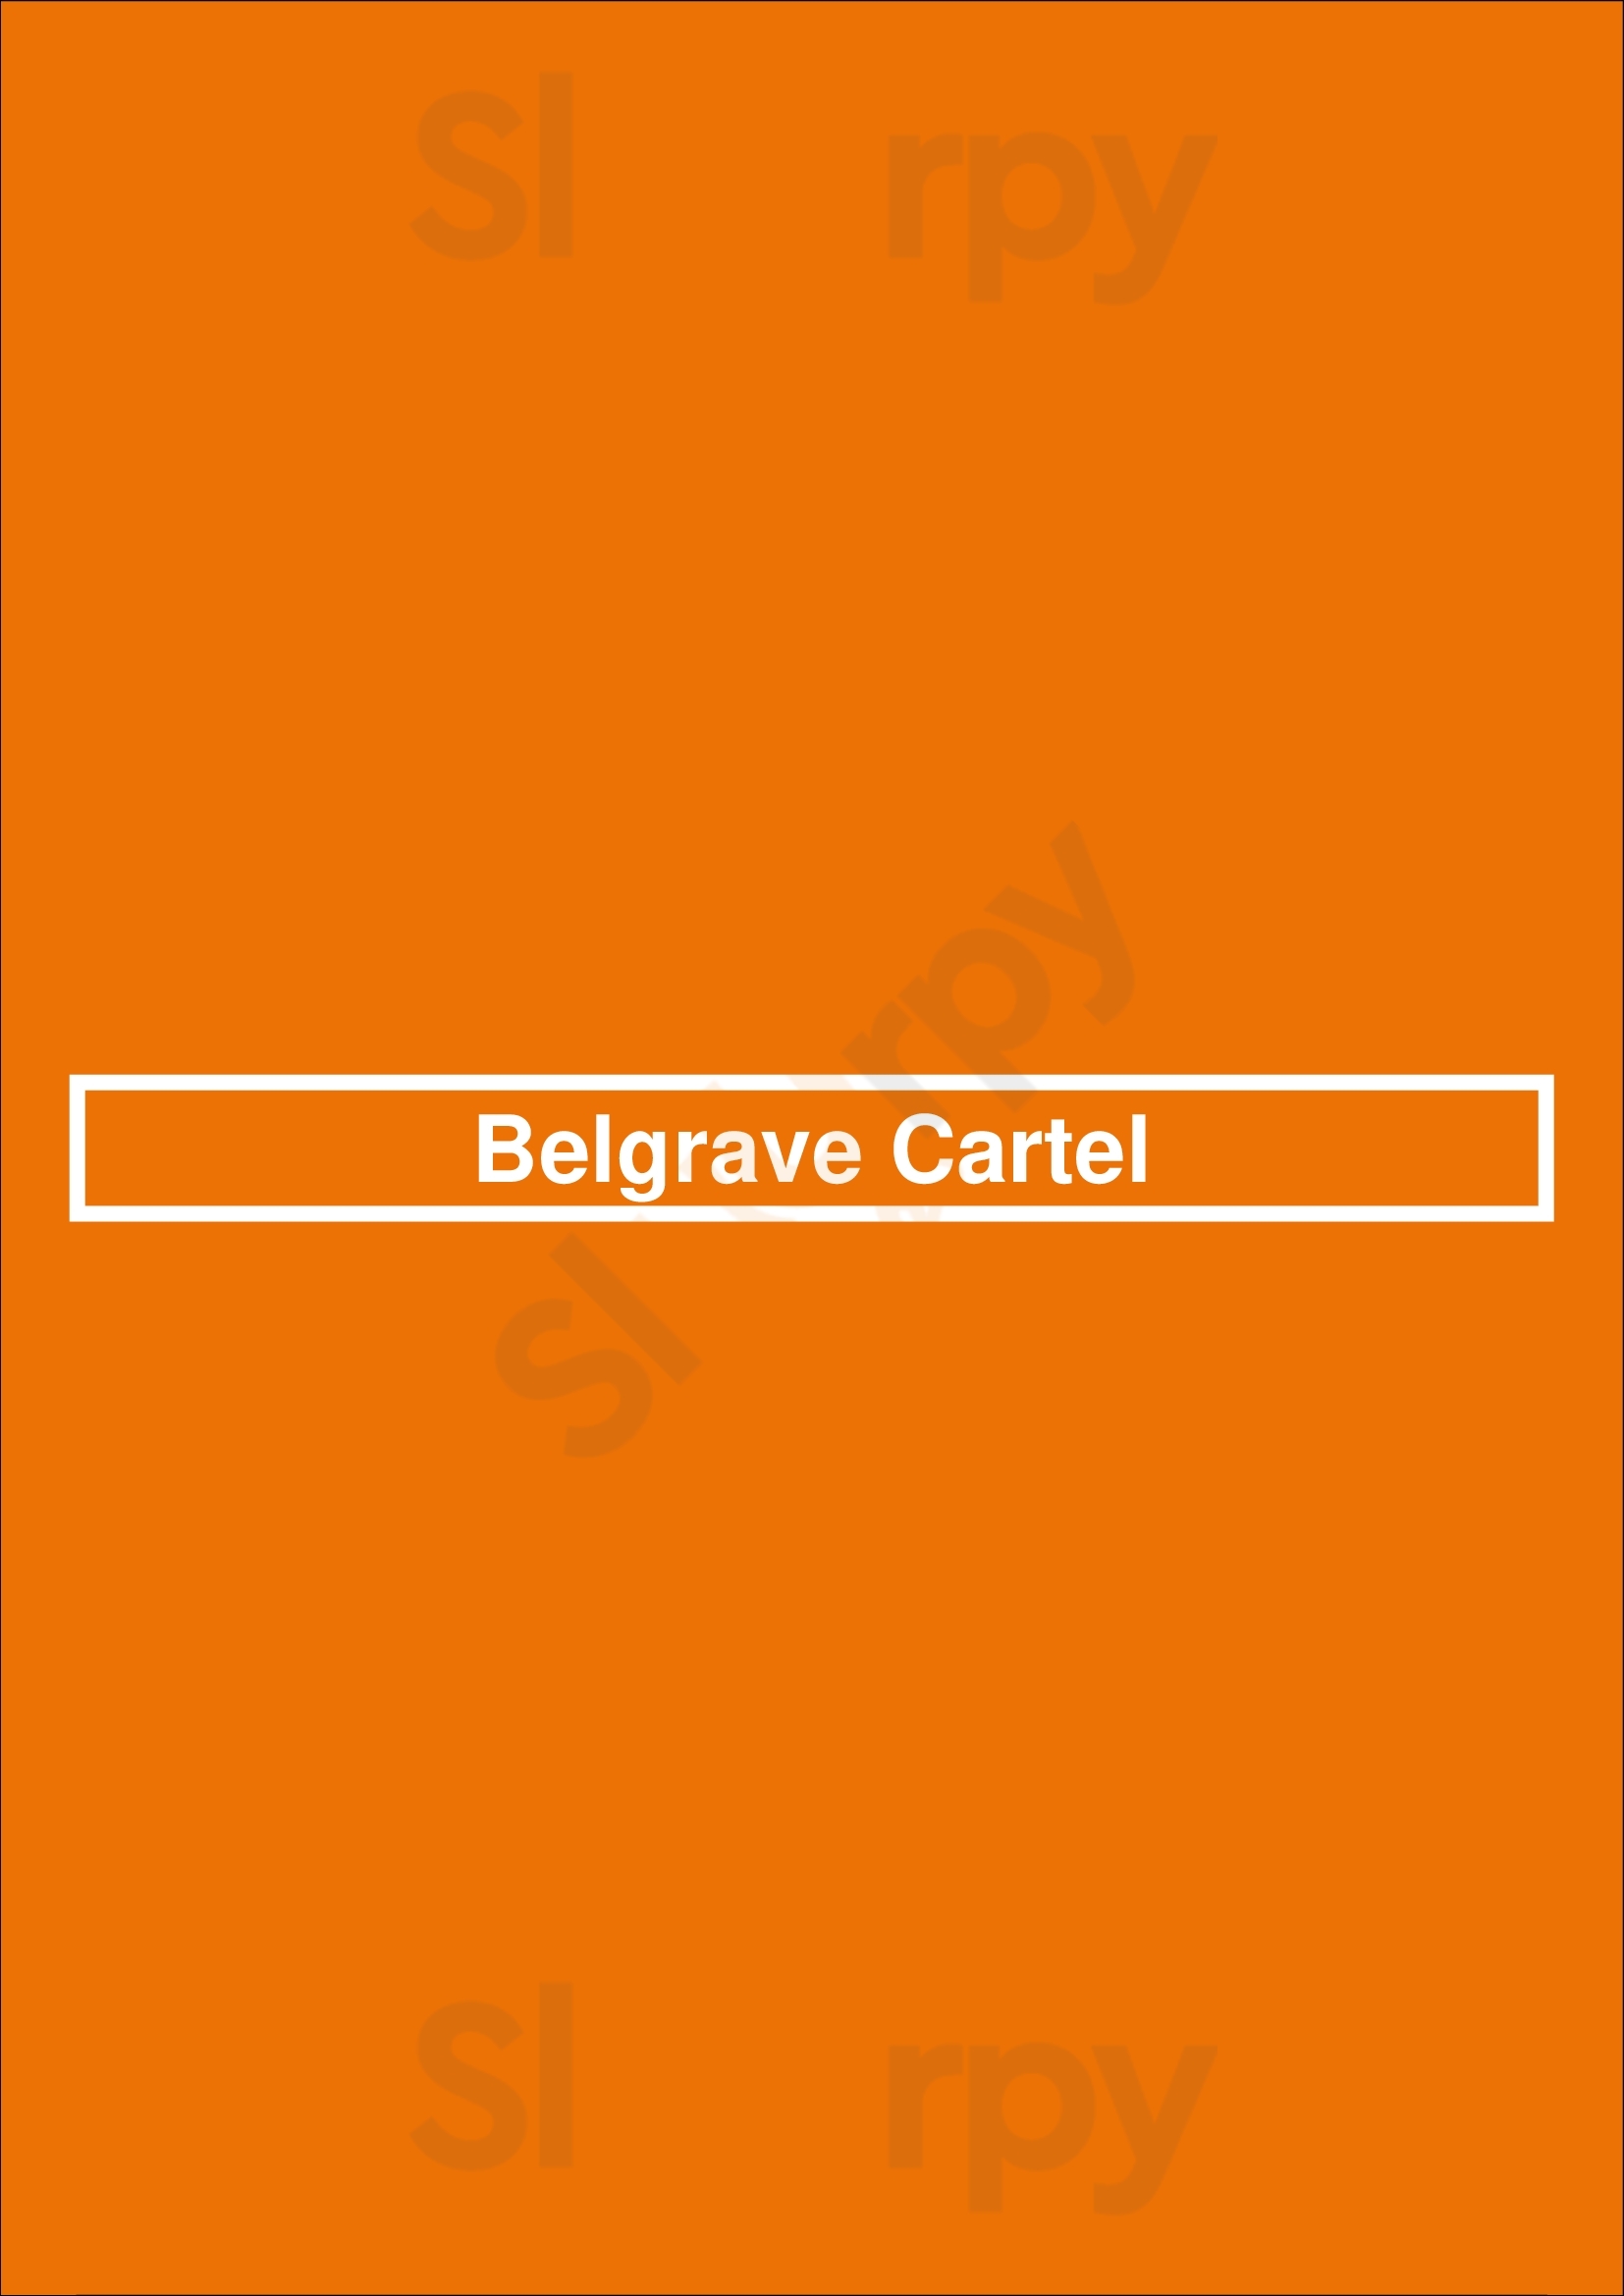 Belgrave Cartel Manly Menu - 1